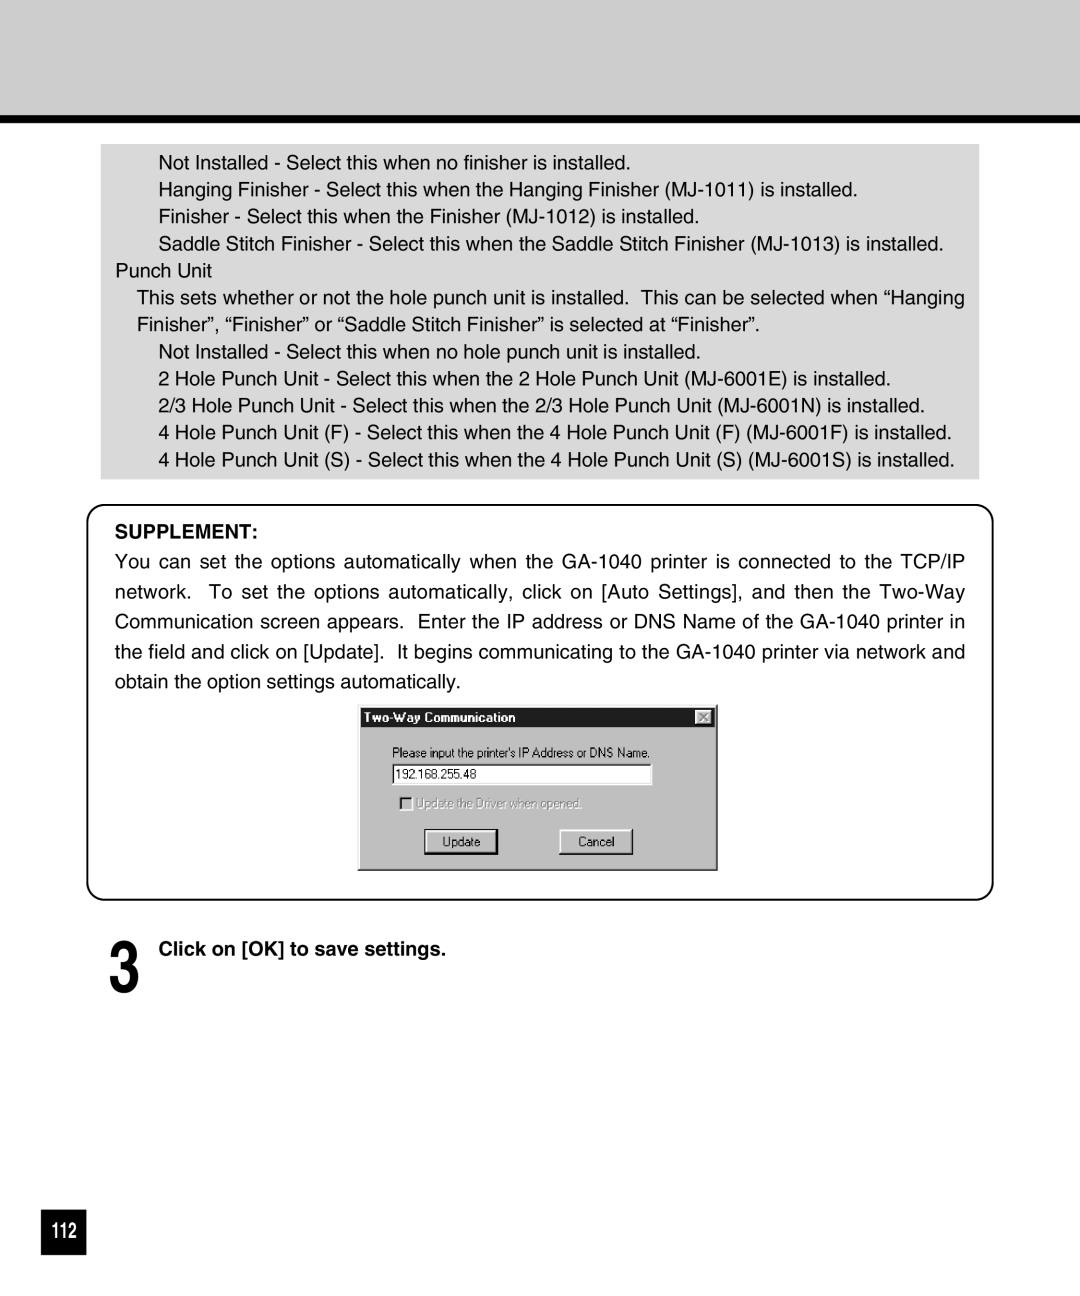 Toshiba GA-1040 manual Supplement, Click on OK to save settings 